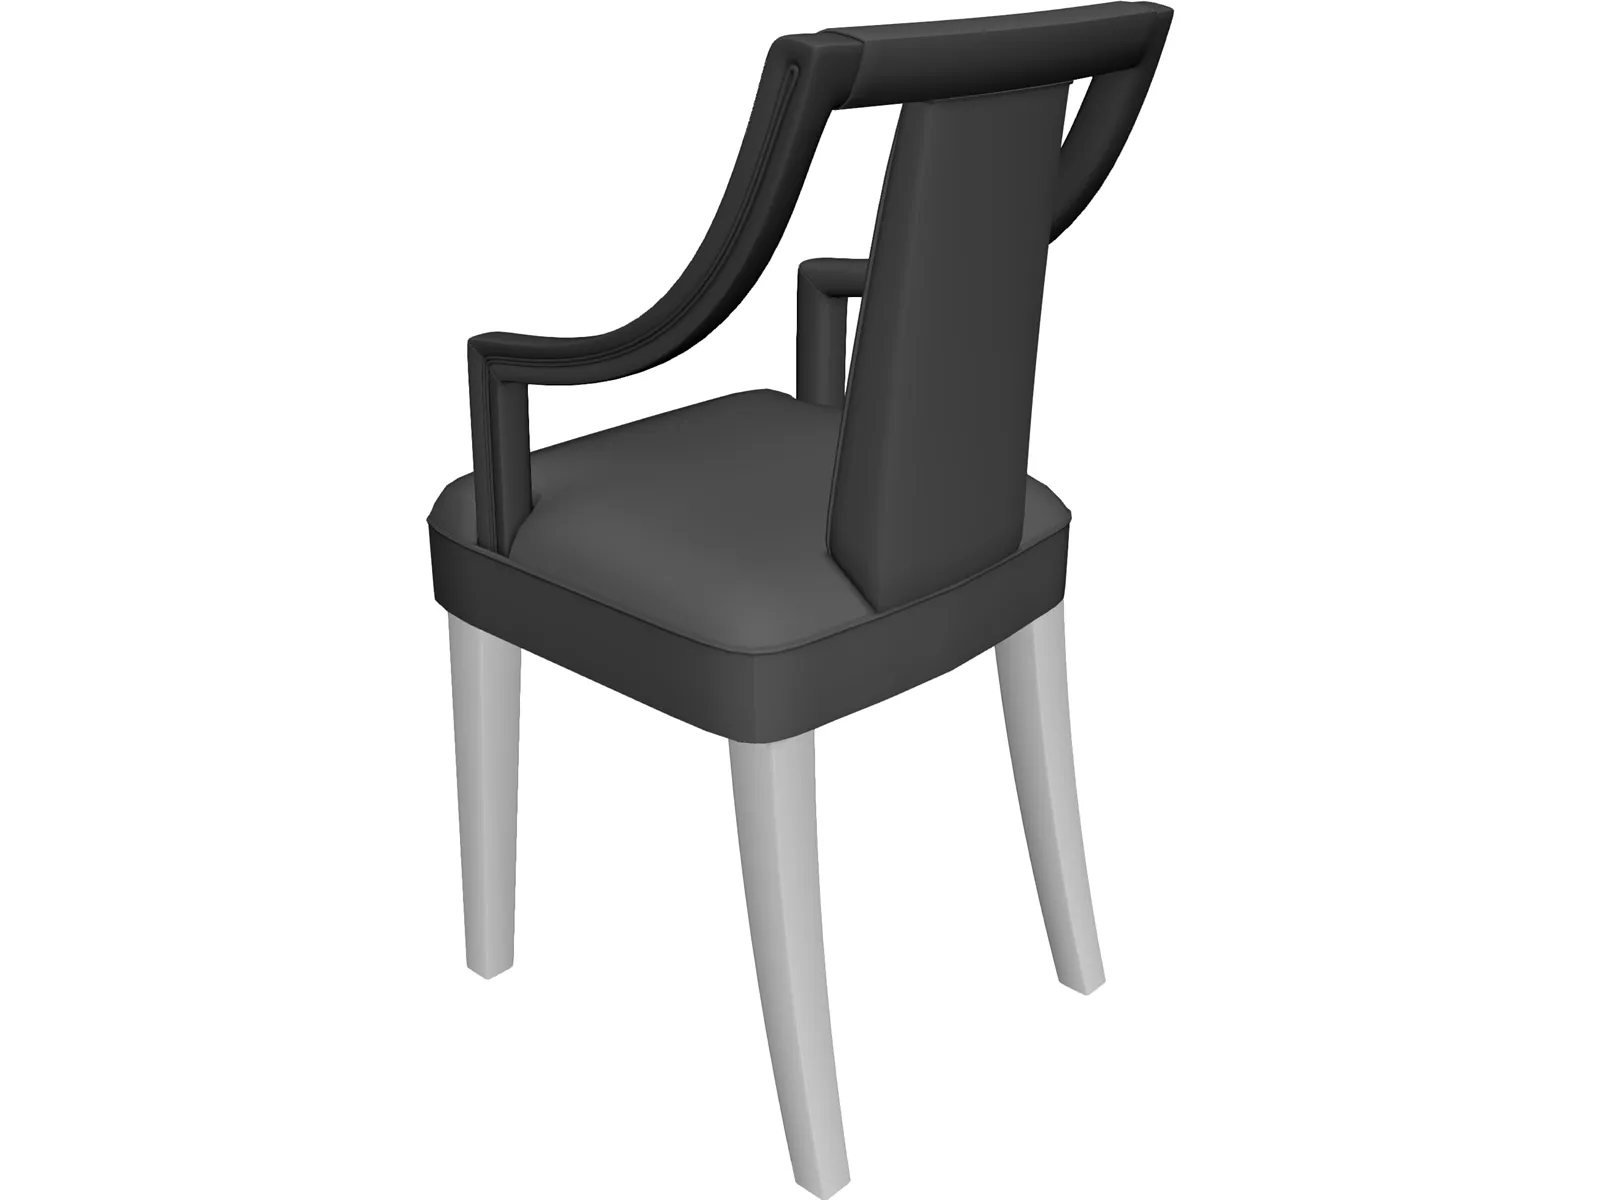 Chair Wood 3D Model